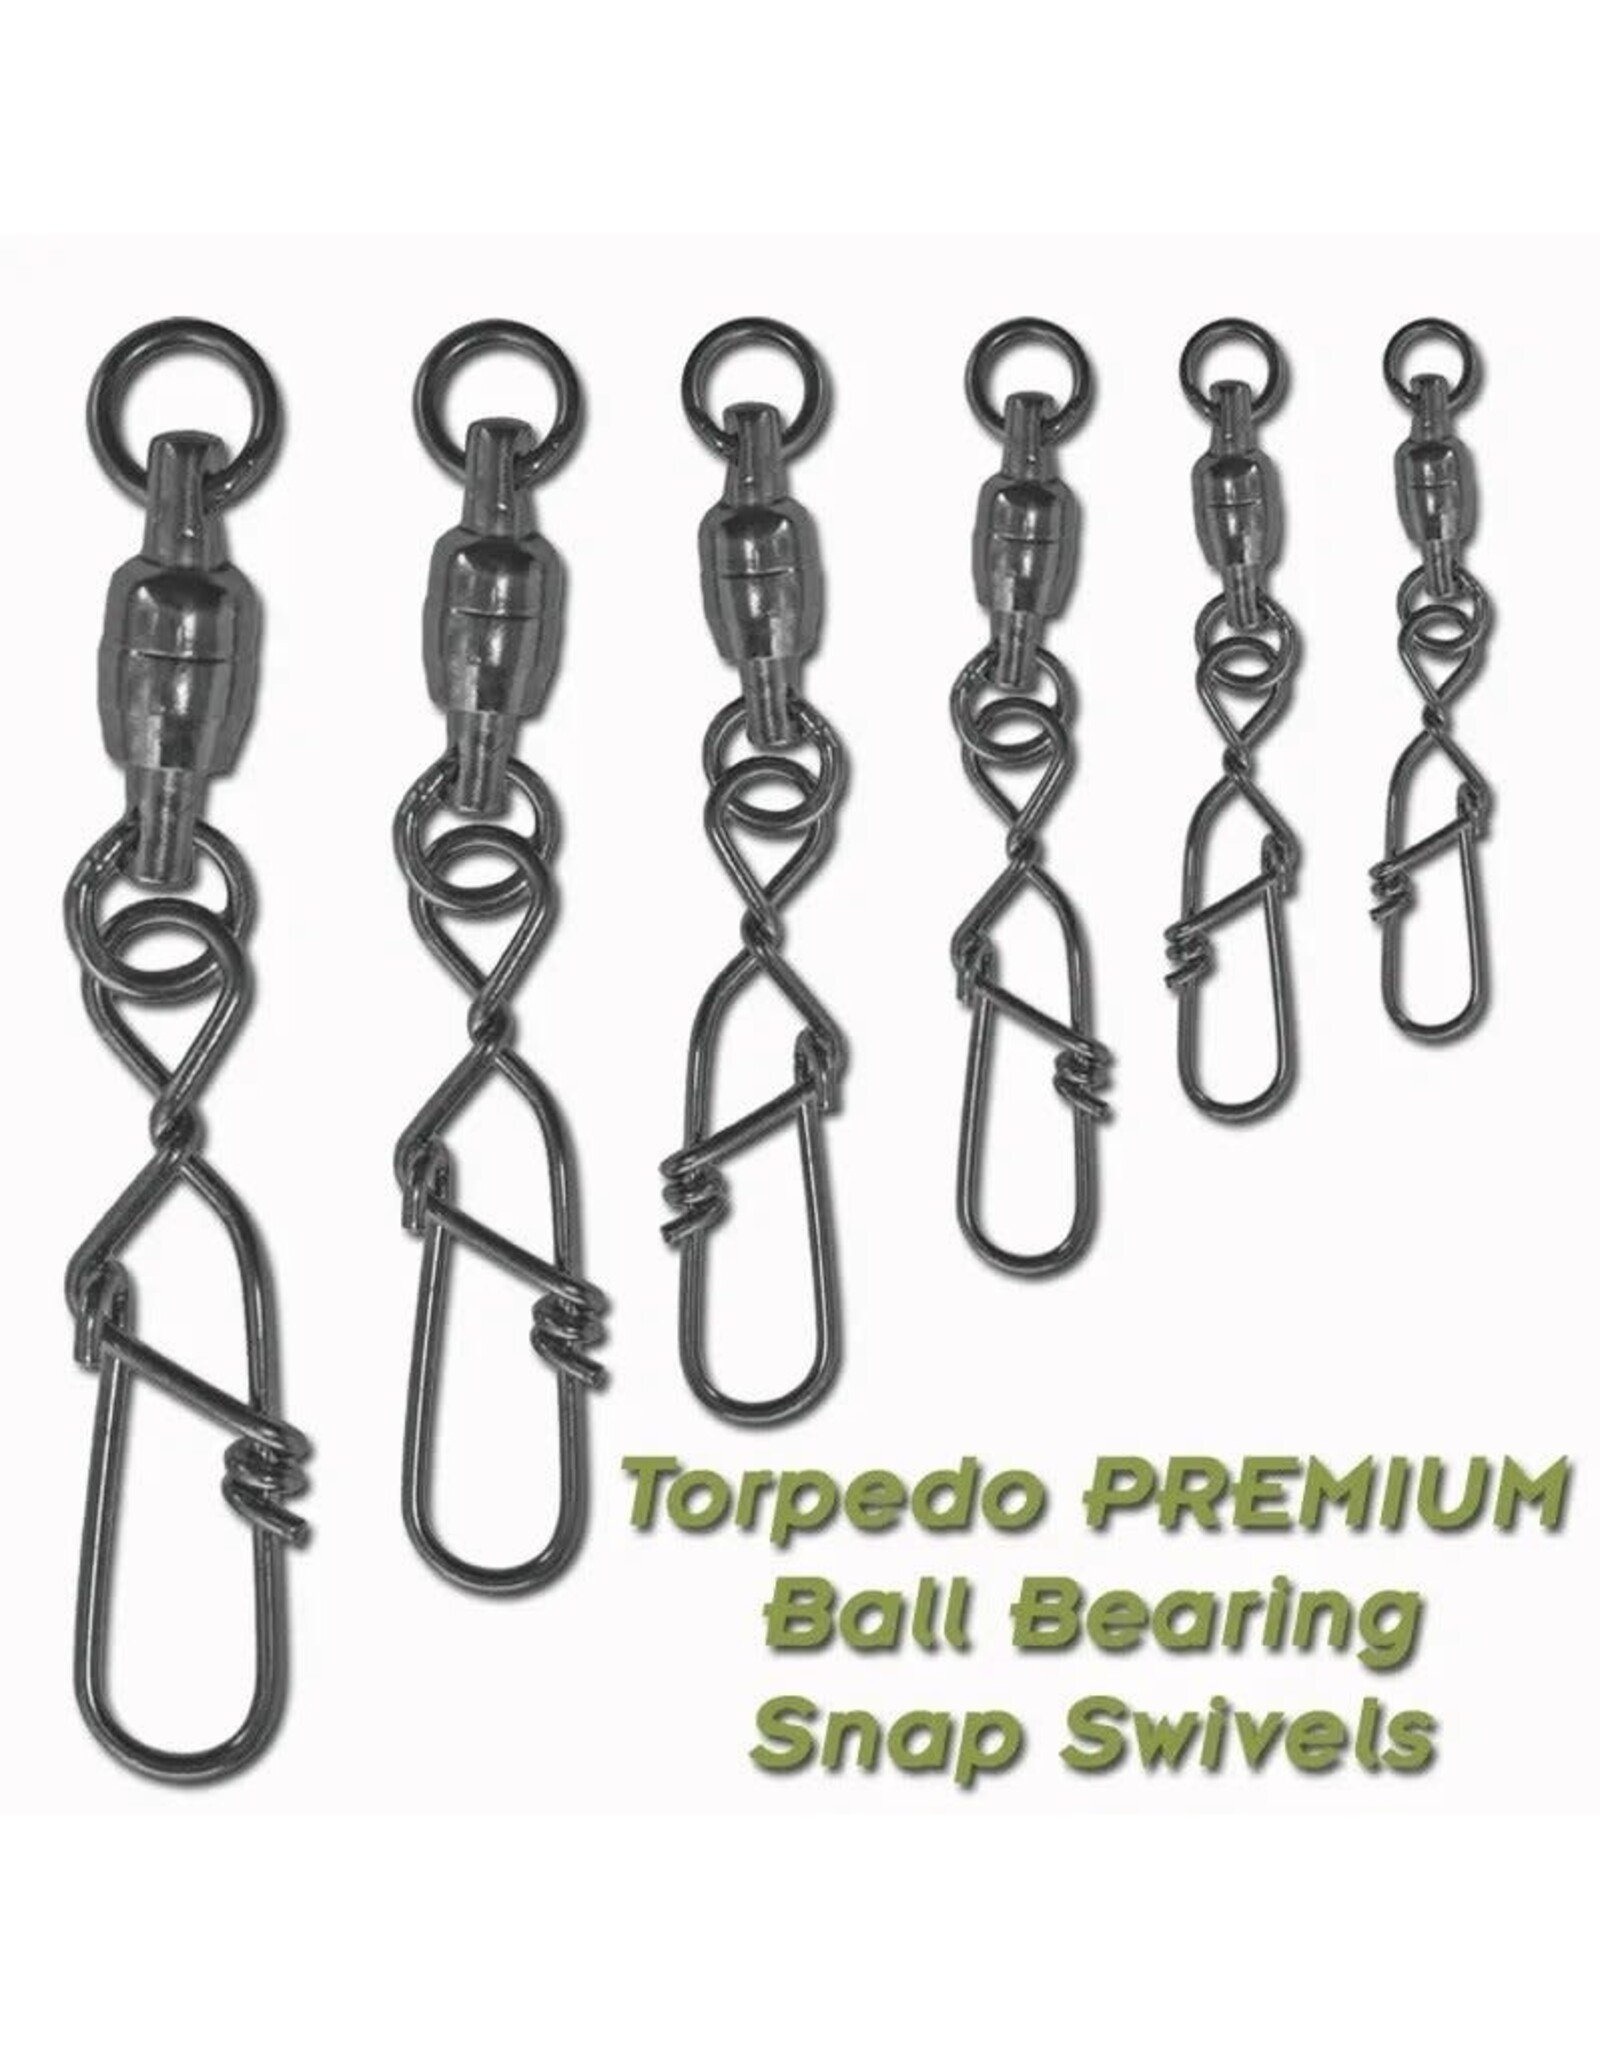 Torpedo Premium Ball Bearing Snap Swivels (10 Pack) - Bronson